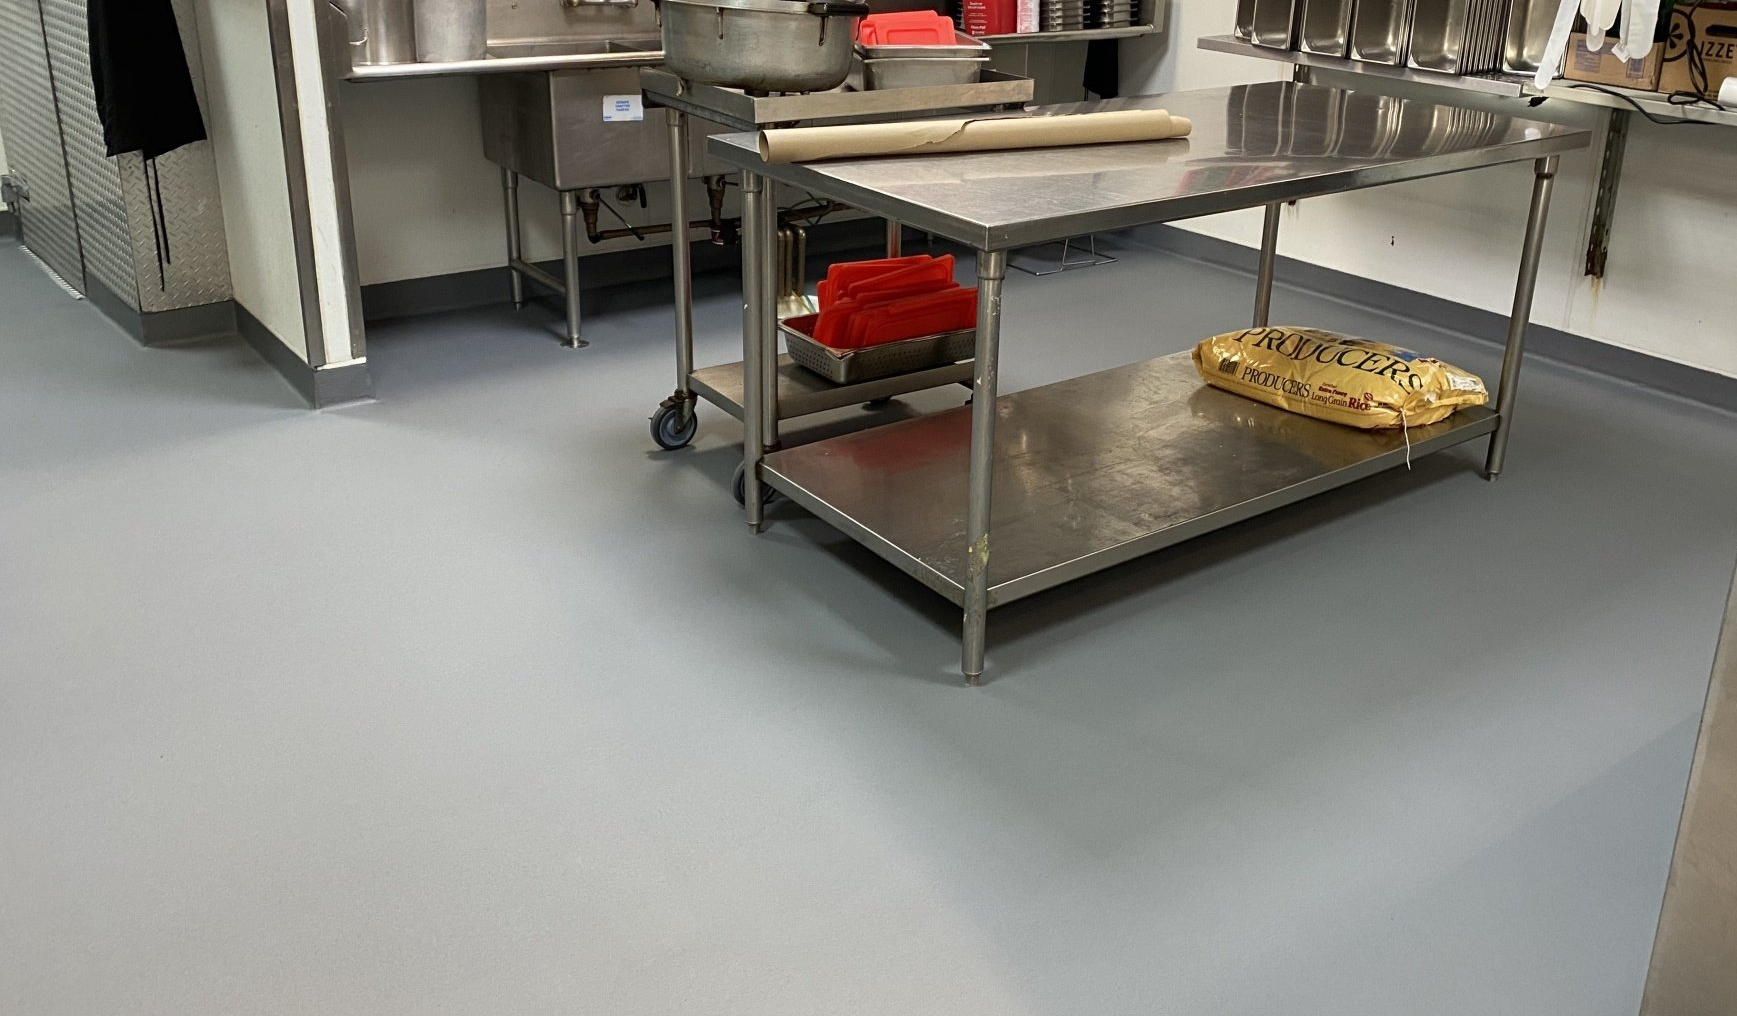 G&G Resinous Flooring installs do-it-all resinous flooring in chain restaurants & locally owned restaurants across the country